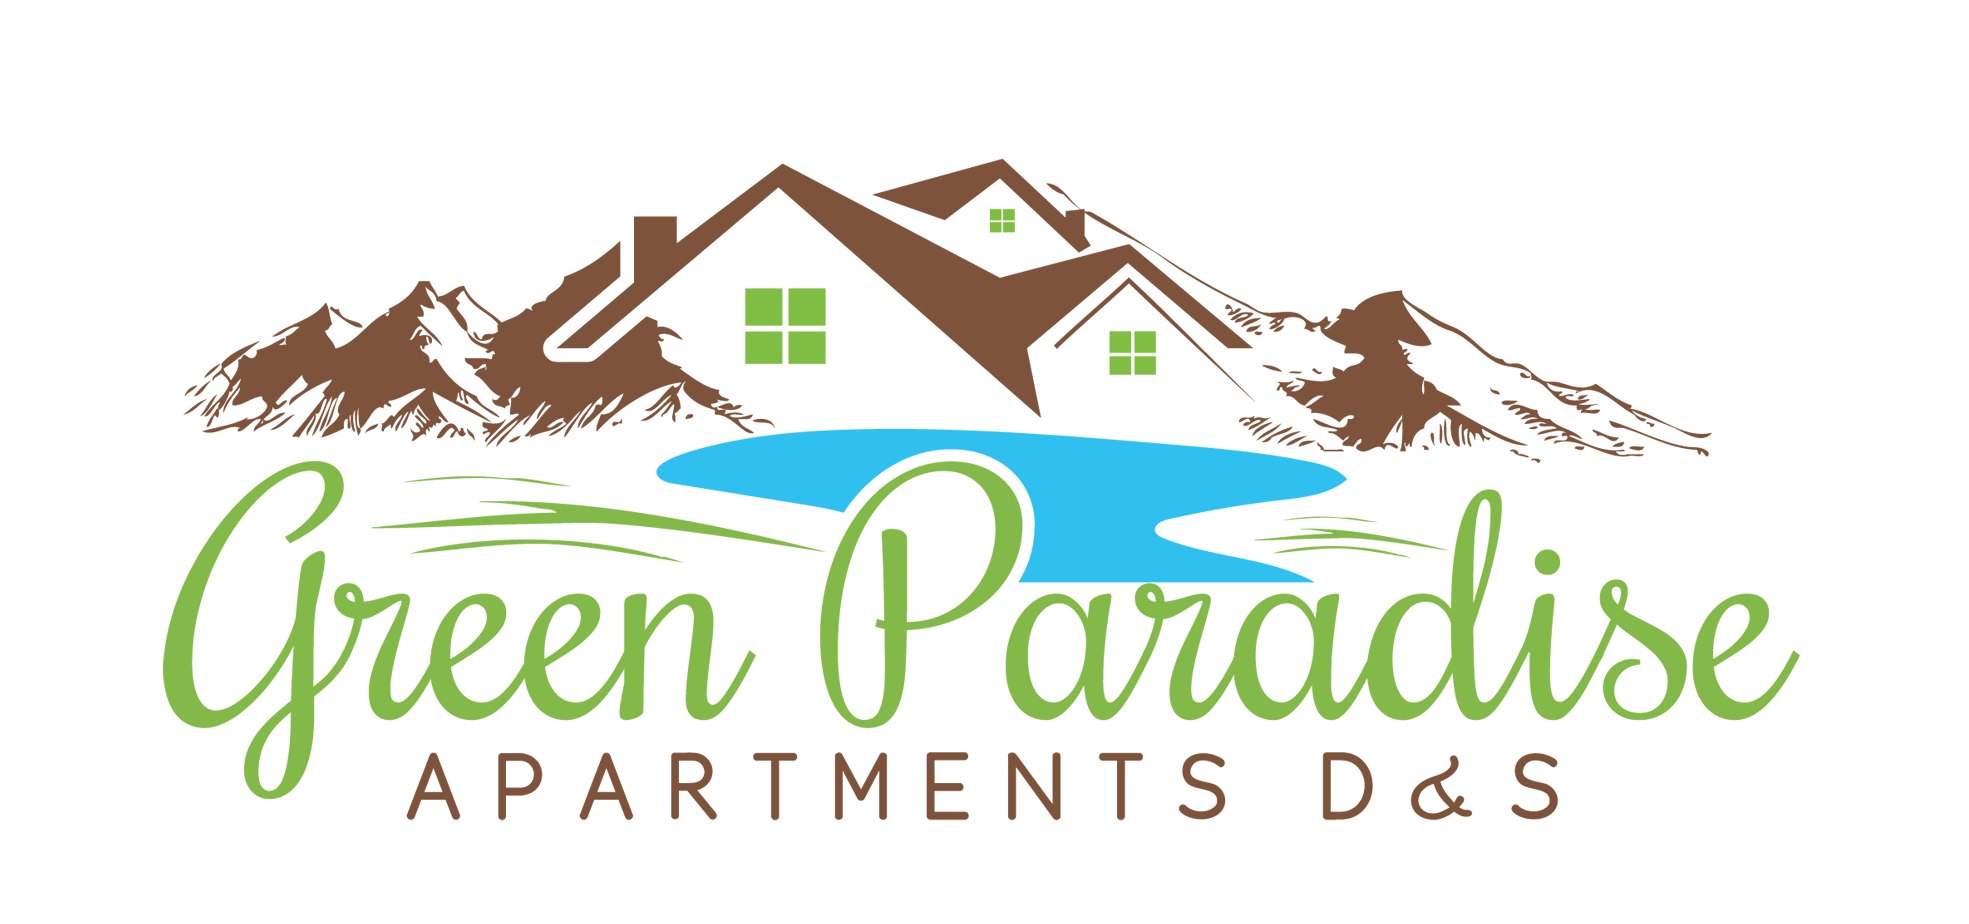 Apartments Green Paradise D&S logo